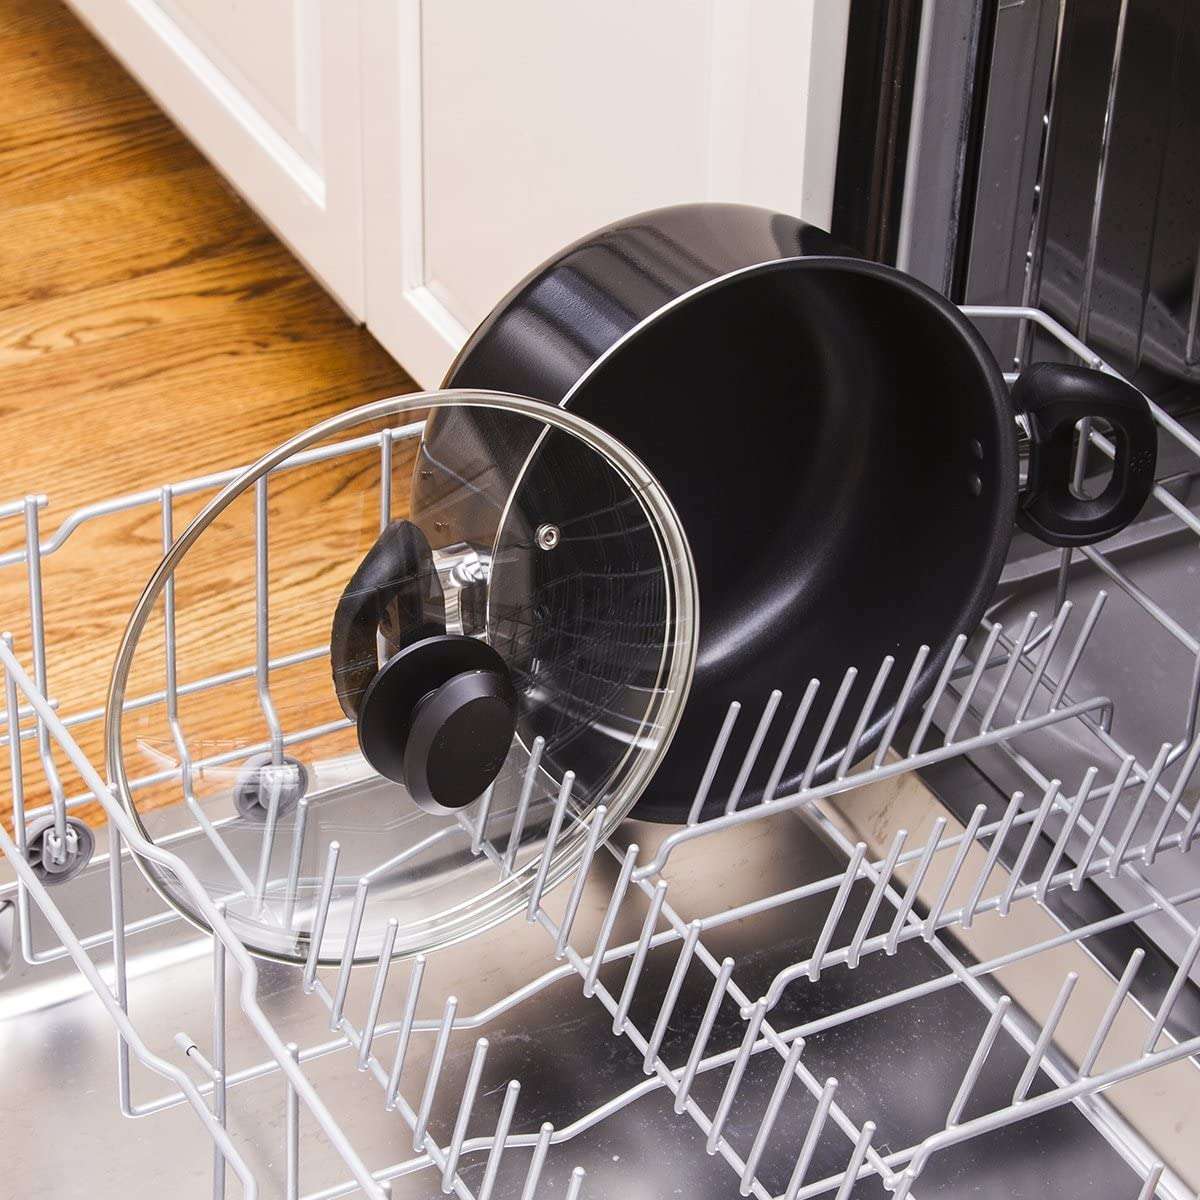 Ecolution Evolve 8 Piece Non-Stick Aluminum Cookware Set, Dishwasher Safe,  Black 